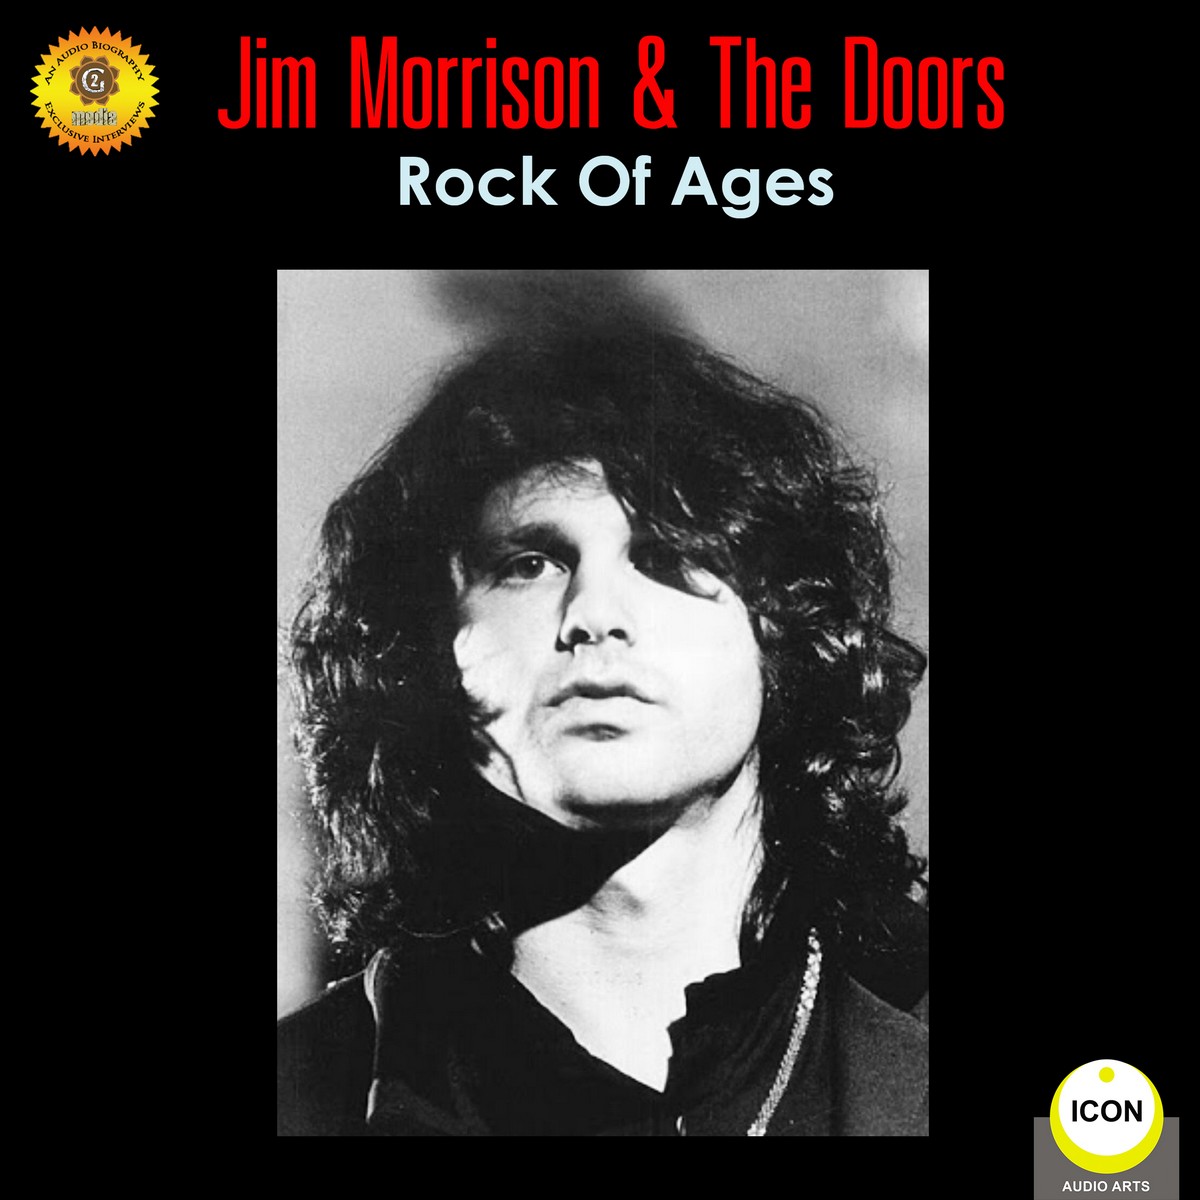 Jim Morrison & the Doors – Rock of Ages